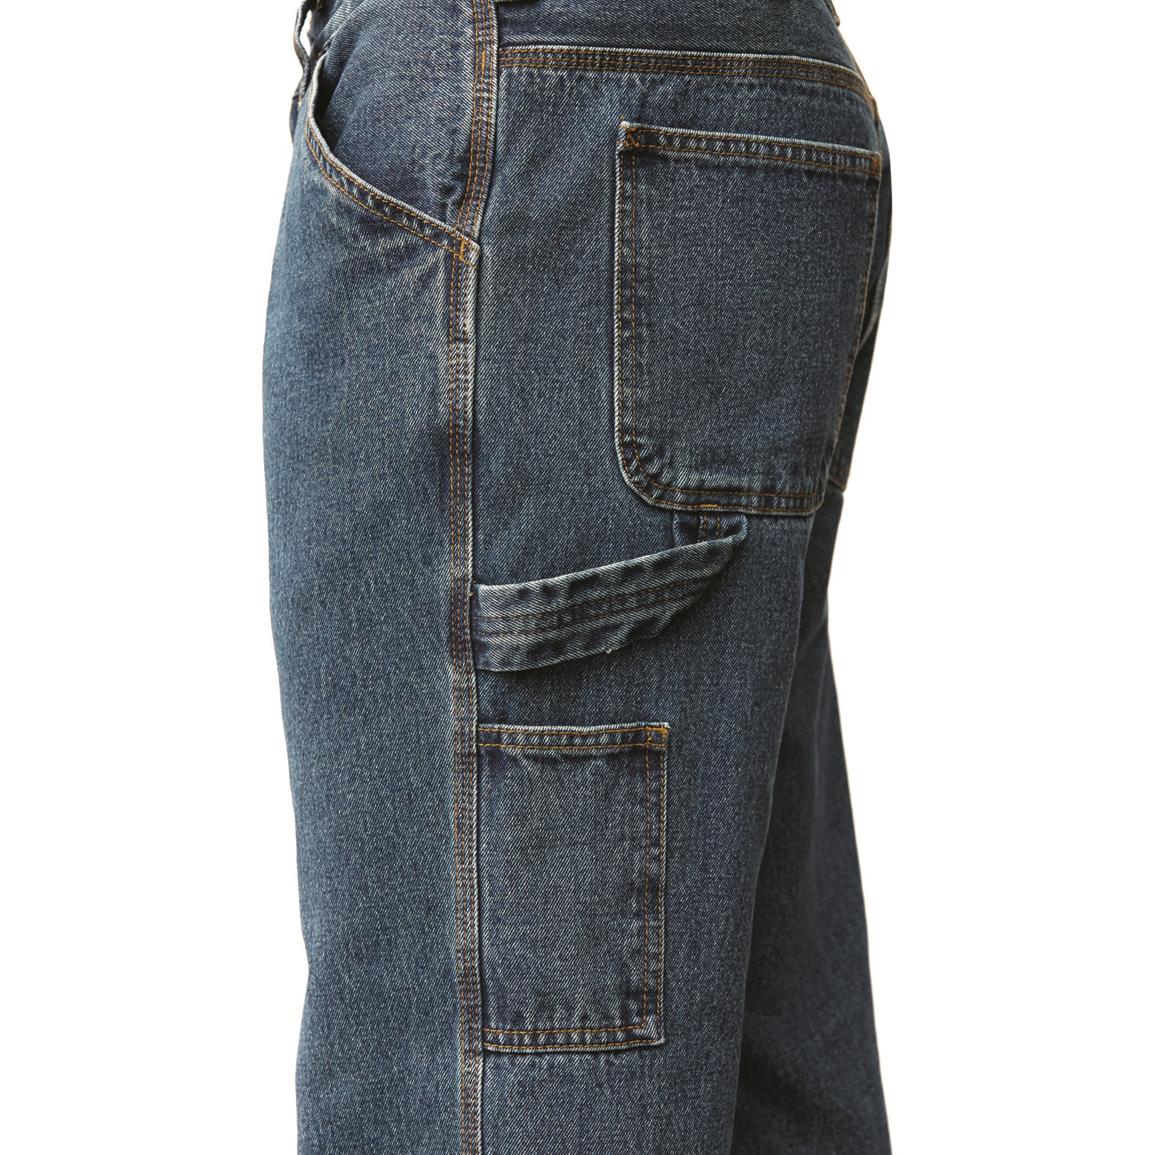 Guide Gear Men's 5-Pocket Carpenter Jeans - 221531, Jeans & Pants at ...